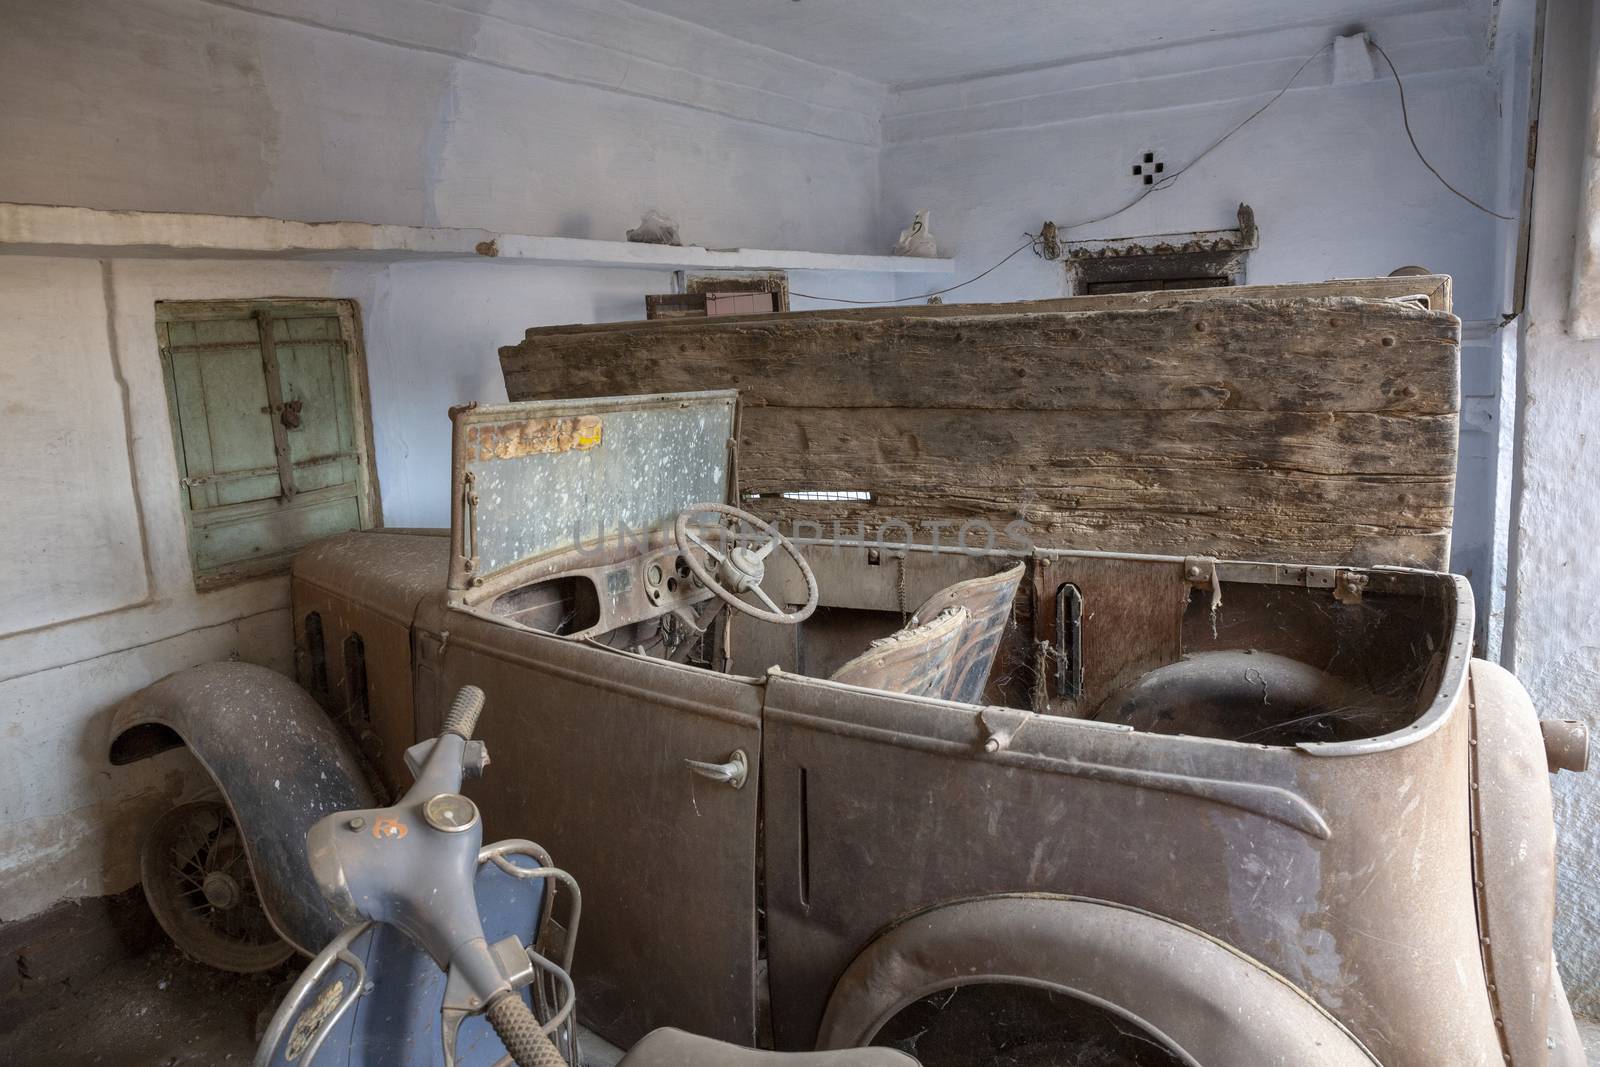 Junk Yard with an old rundown Vintage Car by Tjeerdkruse